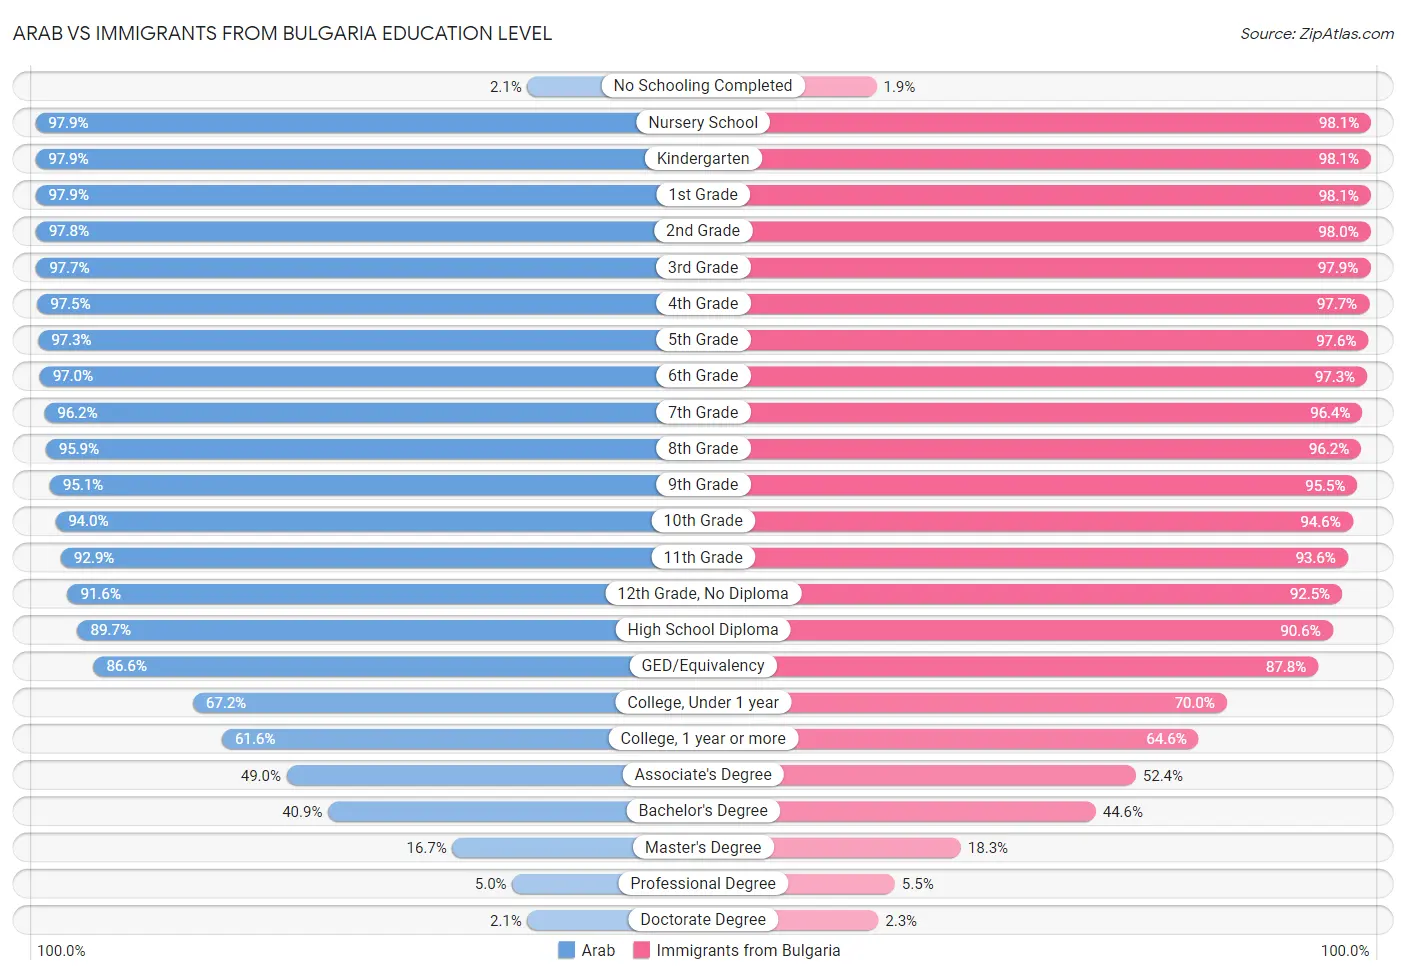 Arab vs Immigrants from Bulgaria Education Level